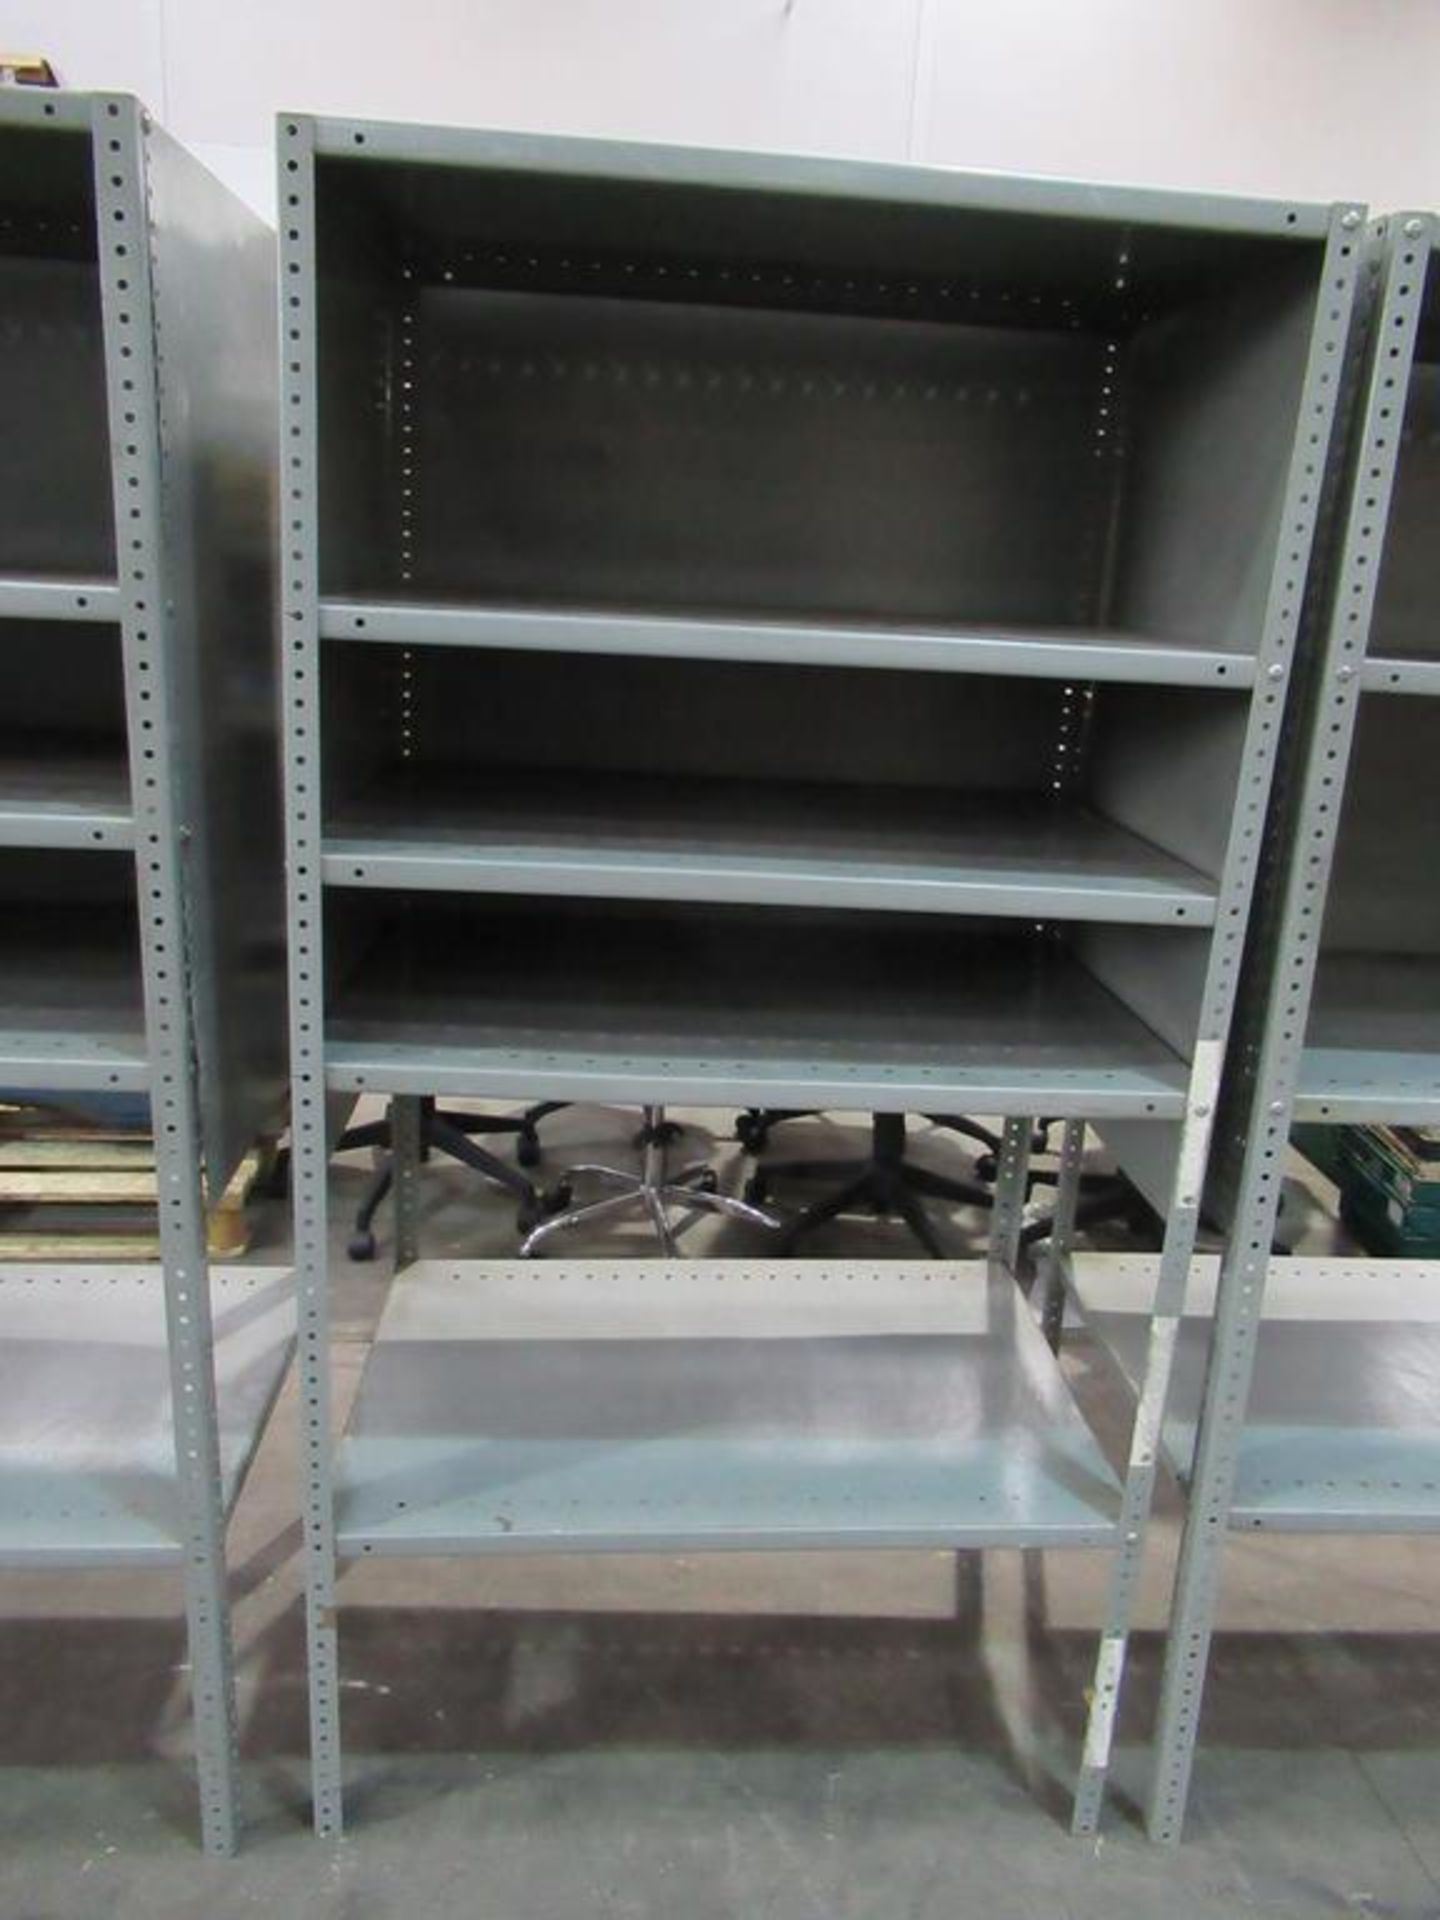 A Set of 3x Light Weight Garage Shelfing Units. - Image 4 of 6